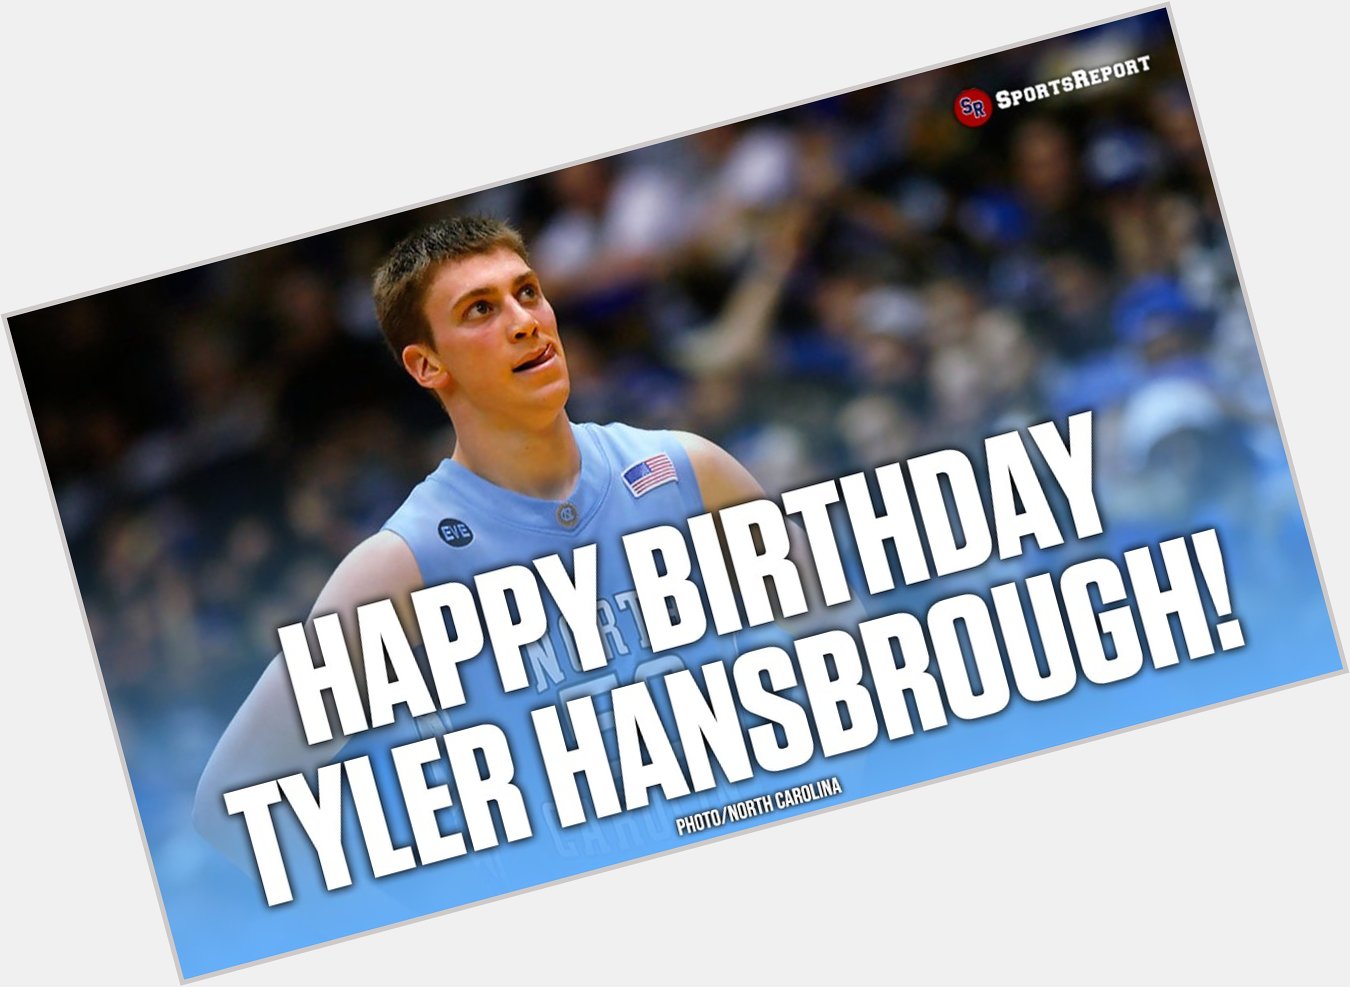  Fans, let\s wish legend Tyler Hansbrough a Happy Birthday! GO 